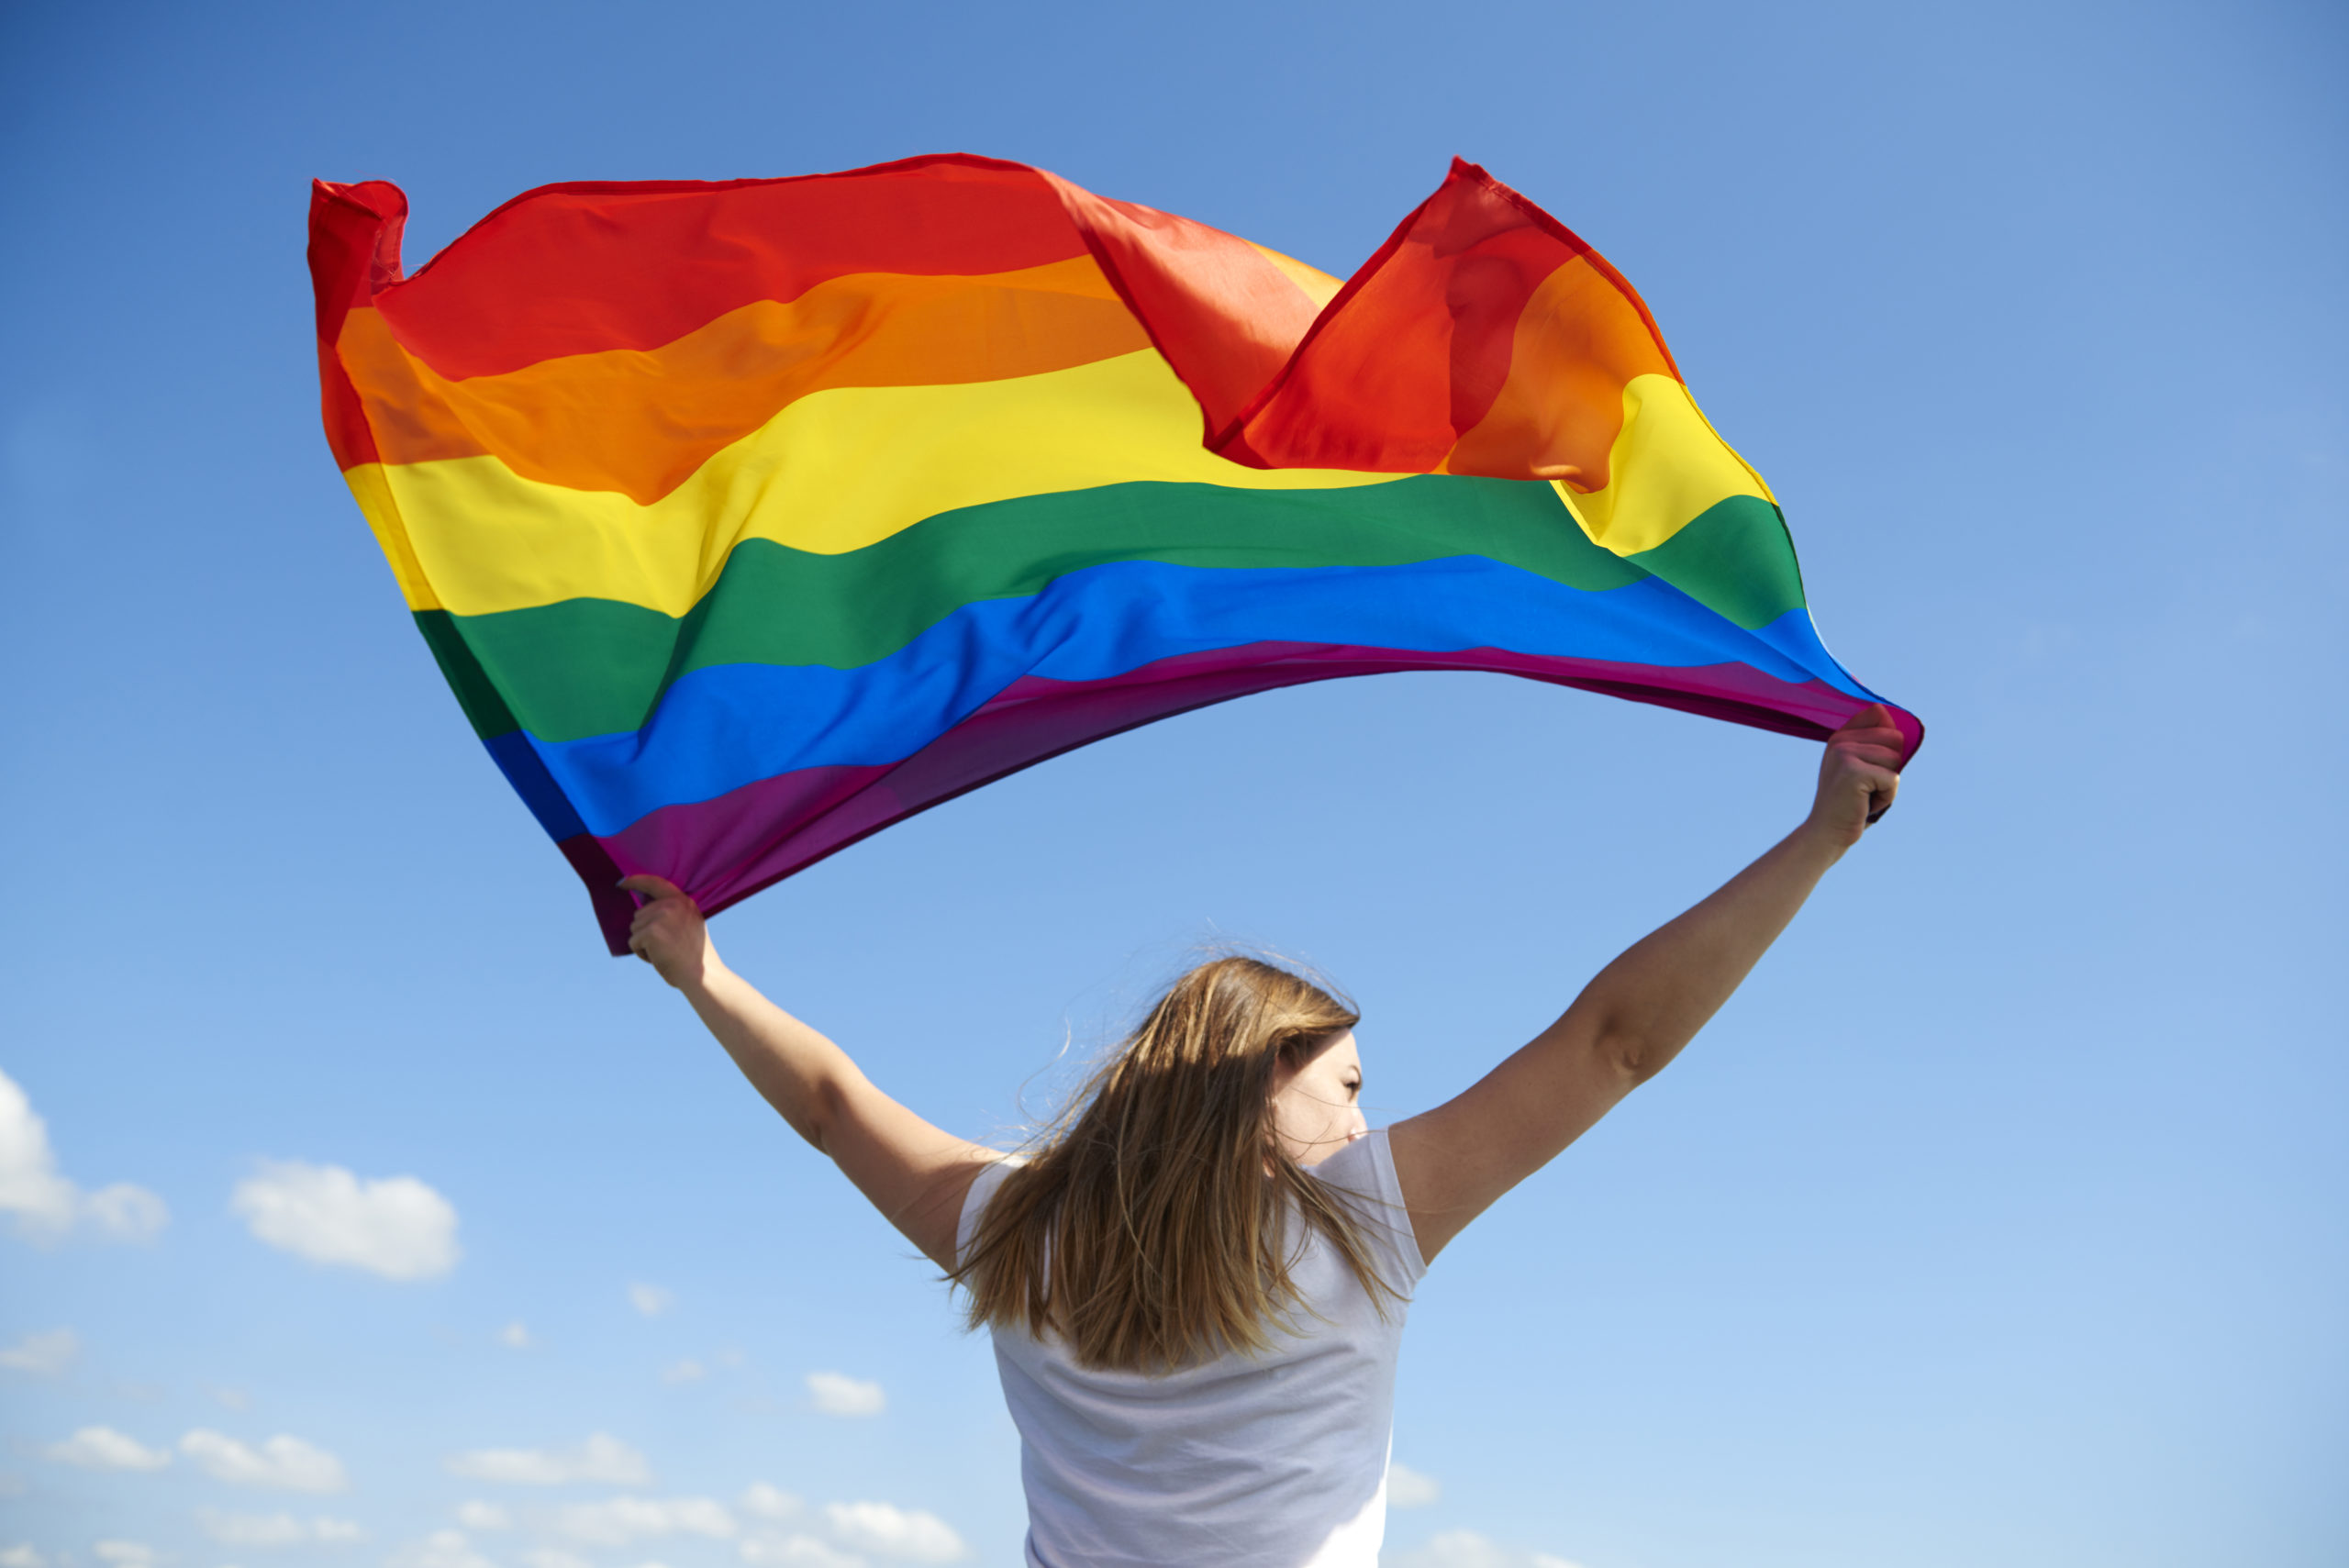 Woman waving an LGBT+ Pride flag against a blue sky.